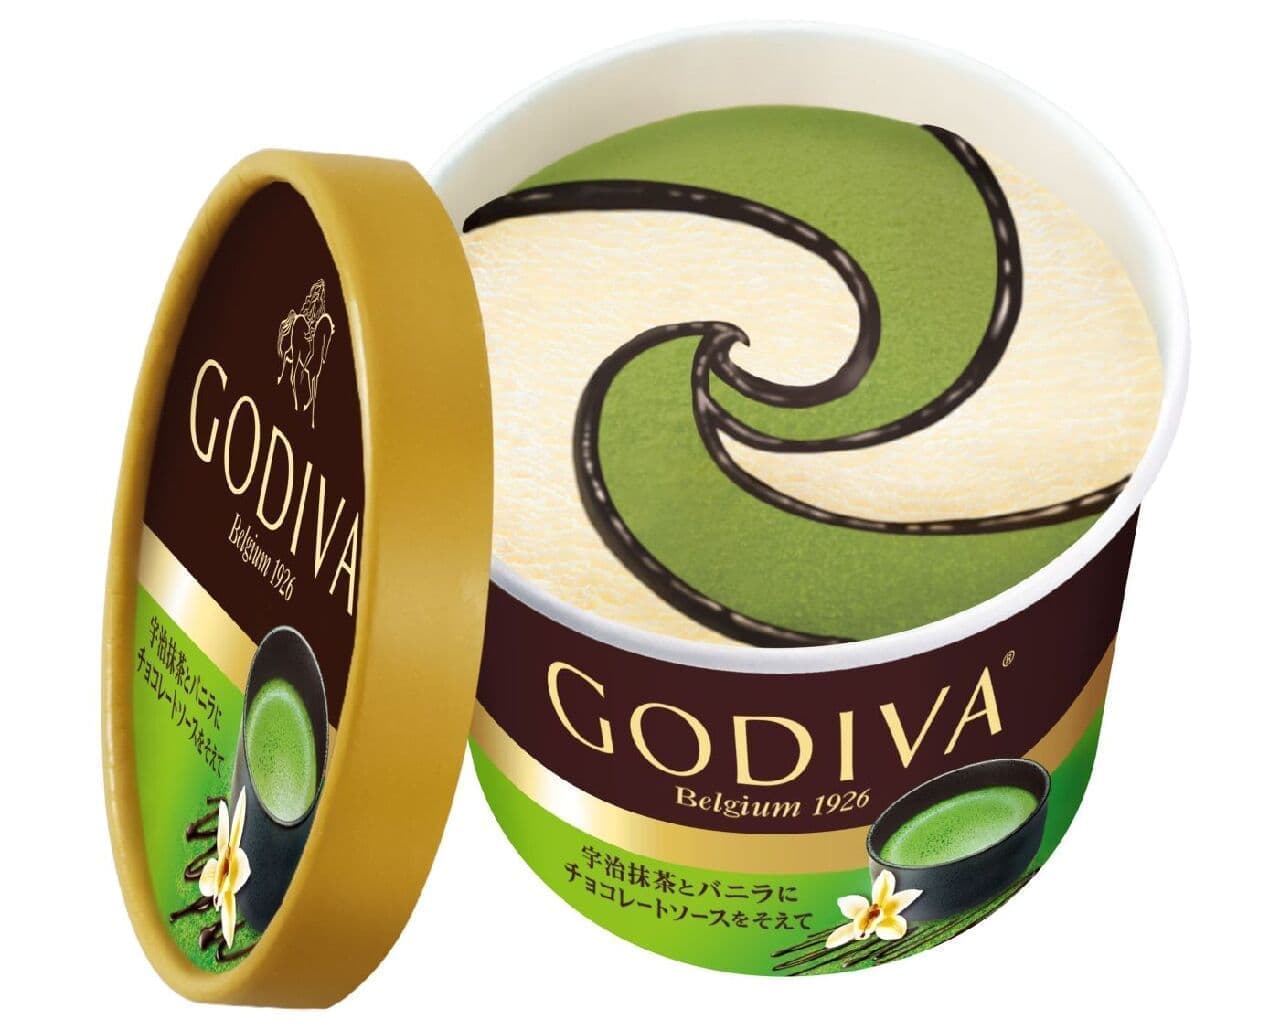 Godiva Cup Ice "Uji Matcha and Vanilla with Chocolate Sauce"